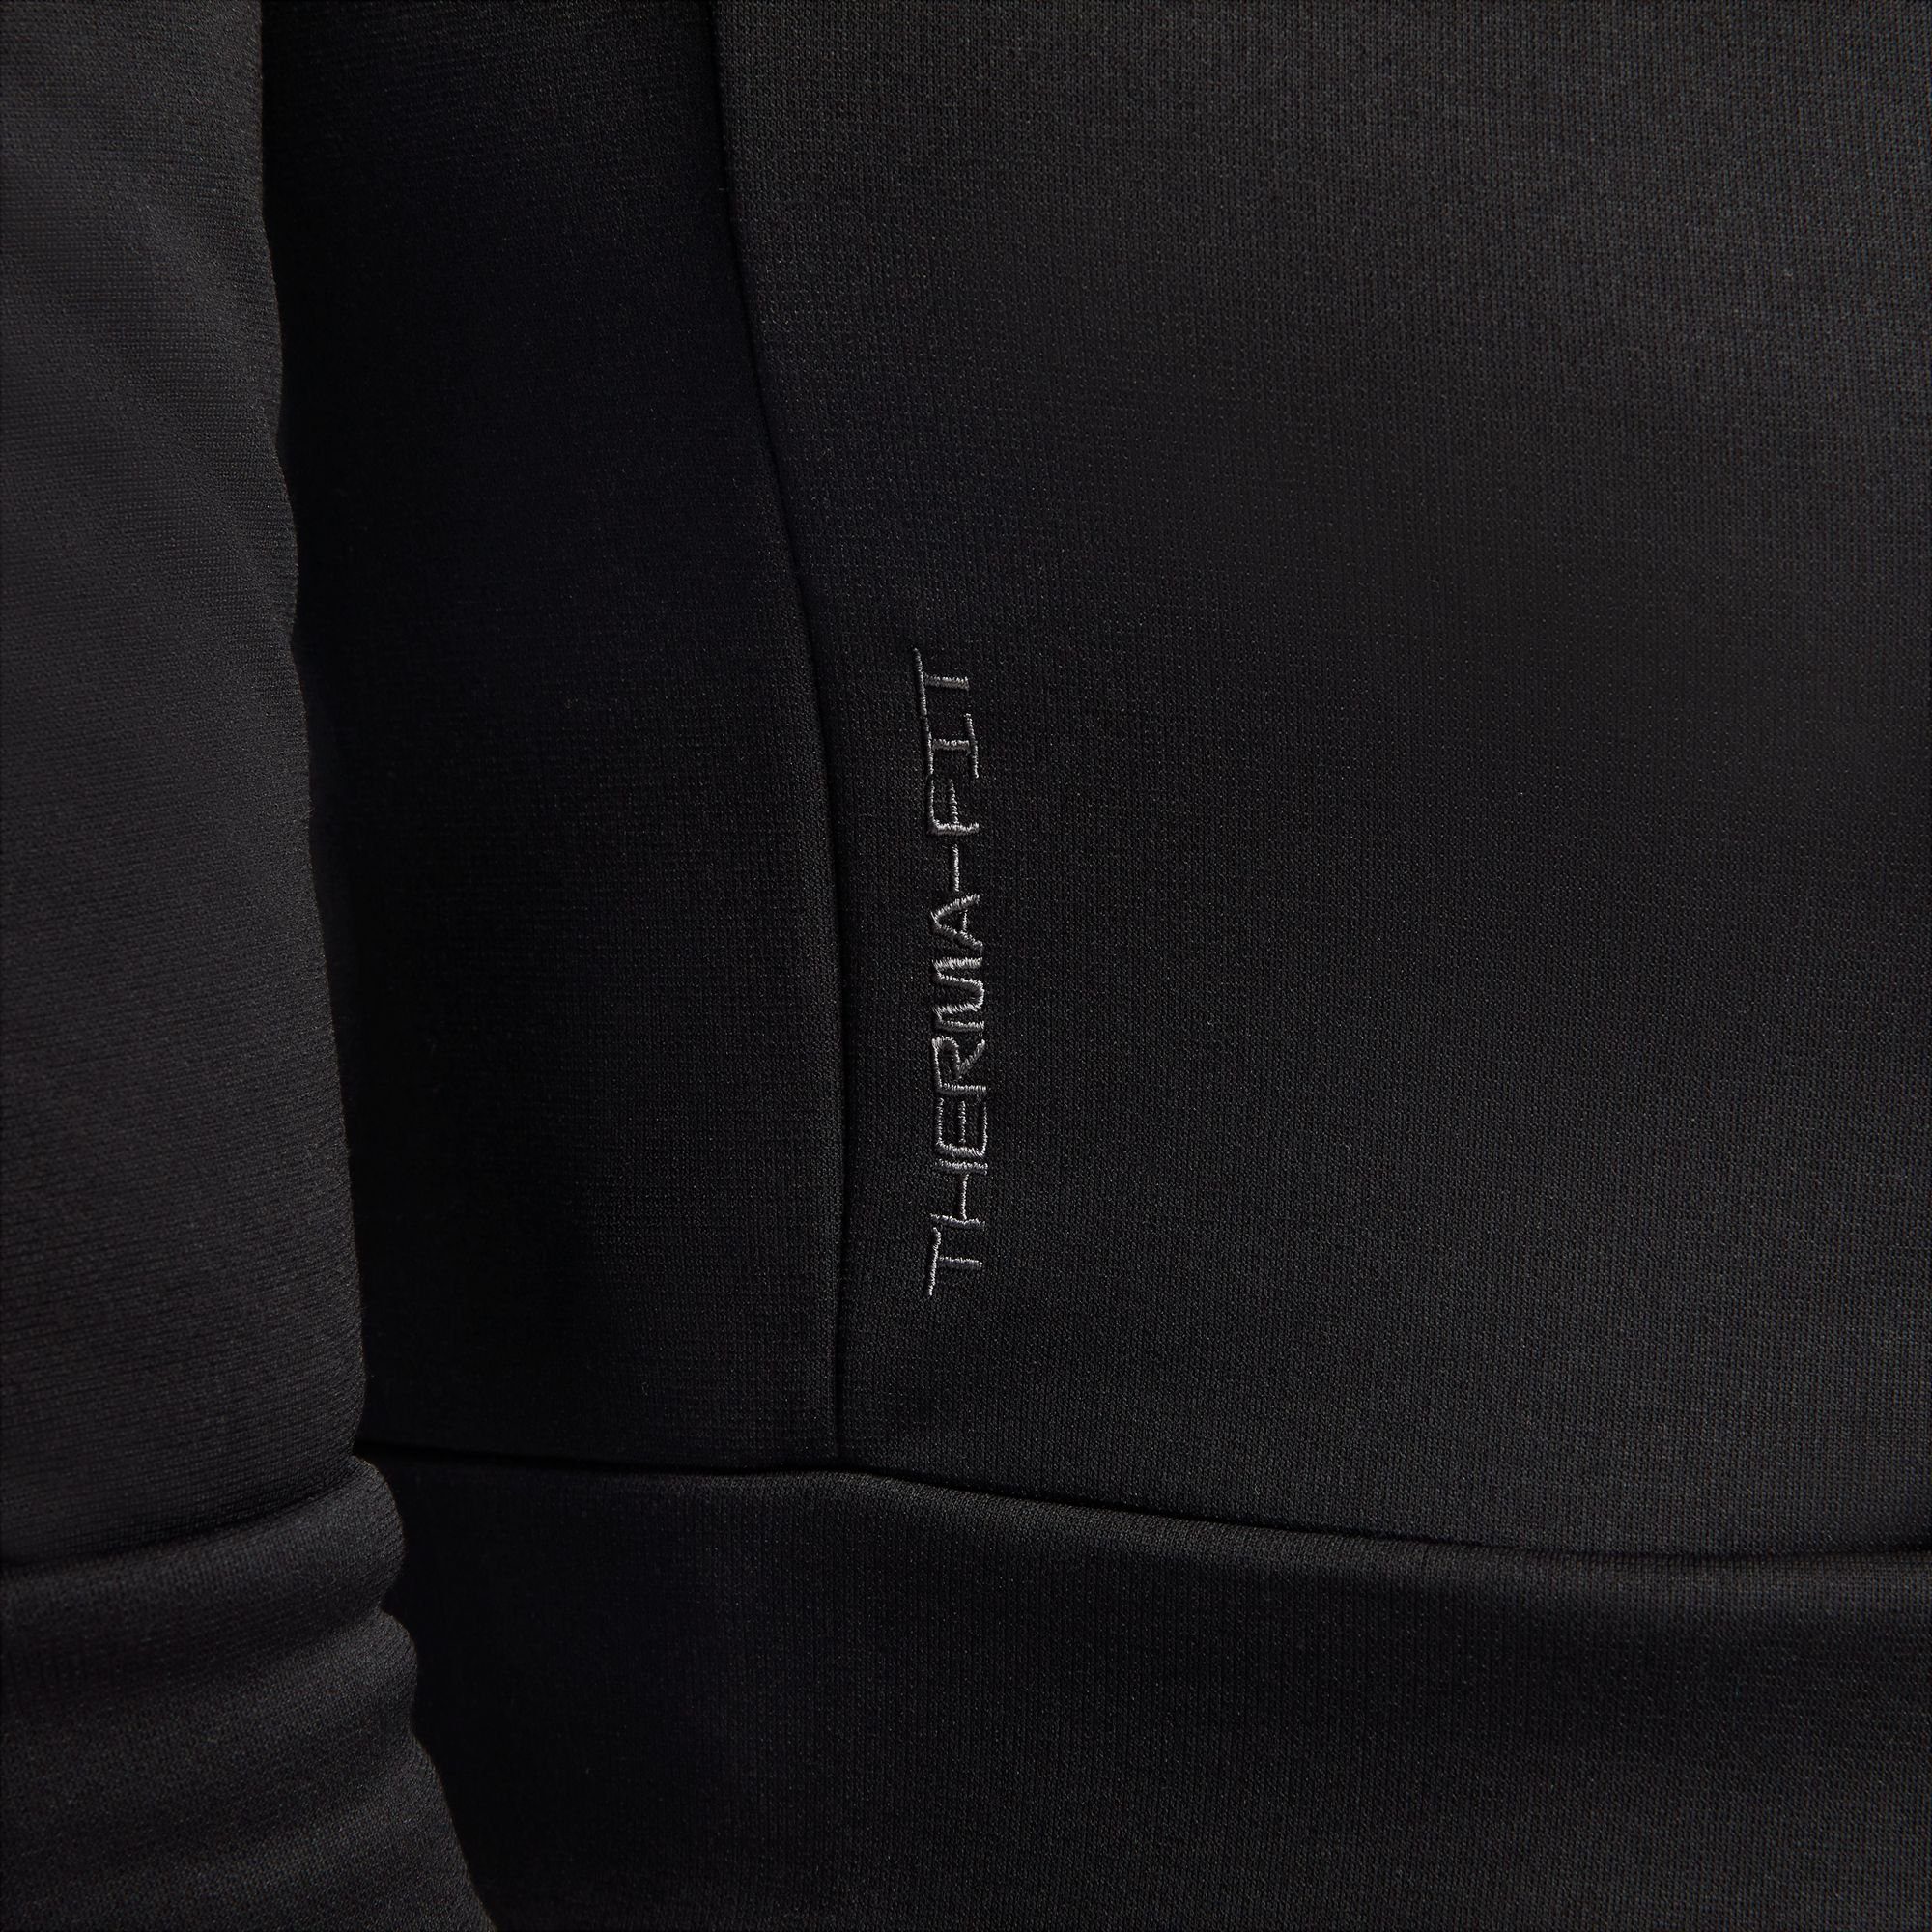 Kapuzensweatshirt HOODIE BLACK/BLACK/WHITE THERMA-FIT Nike PULLOVER FITNESS MEN'S